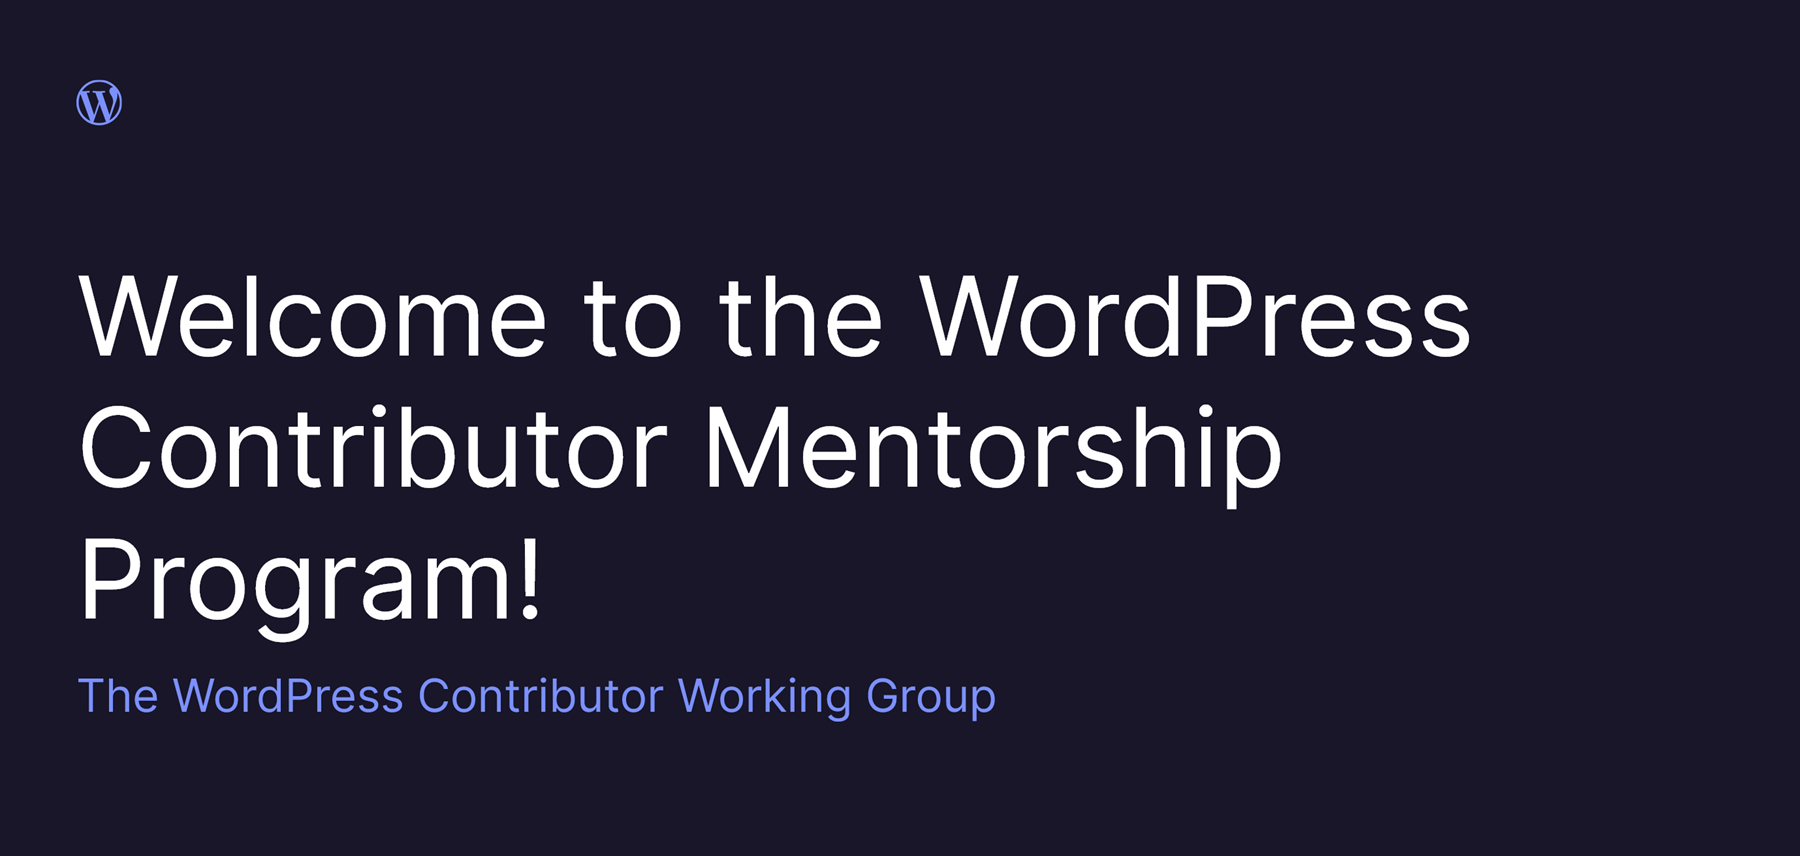 Welcome to the WordPress Contributor Mentorship Program slide